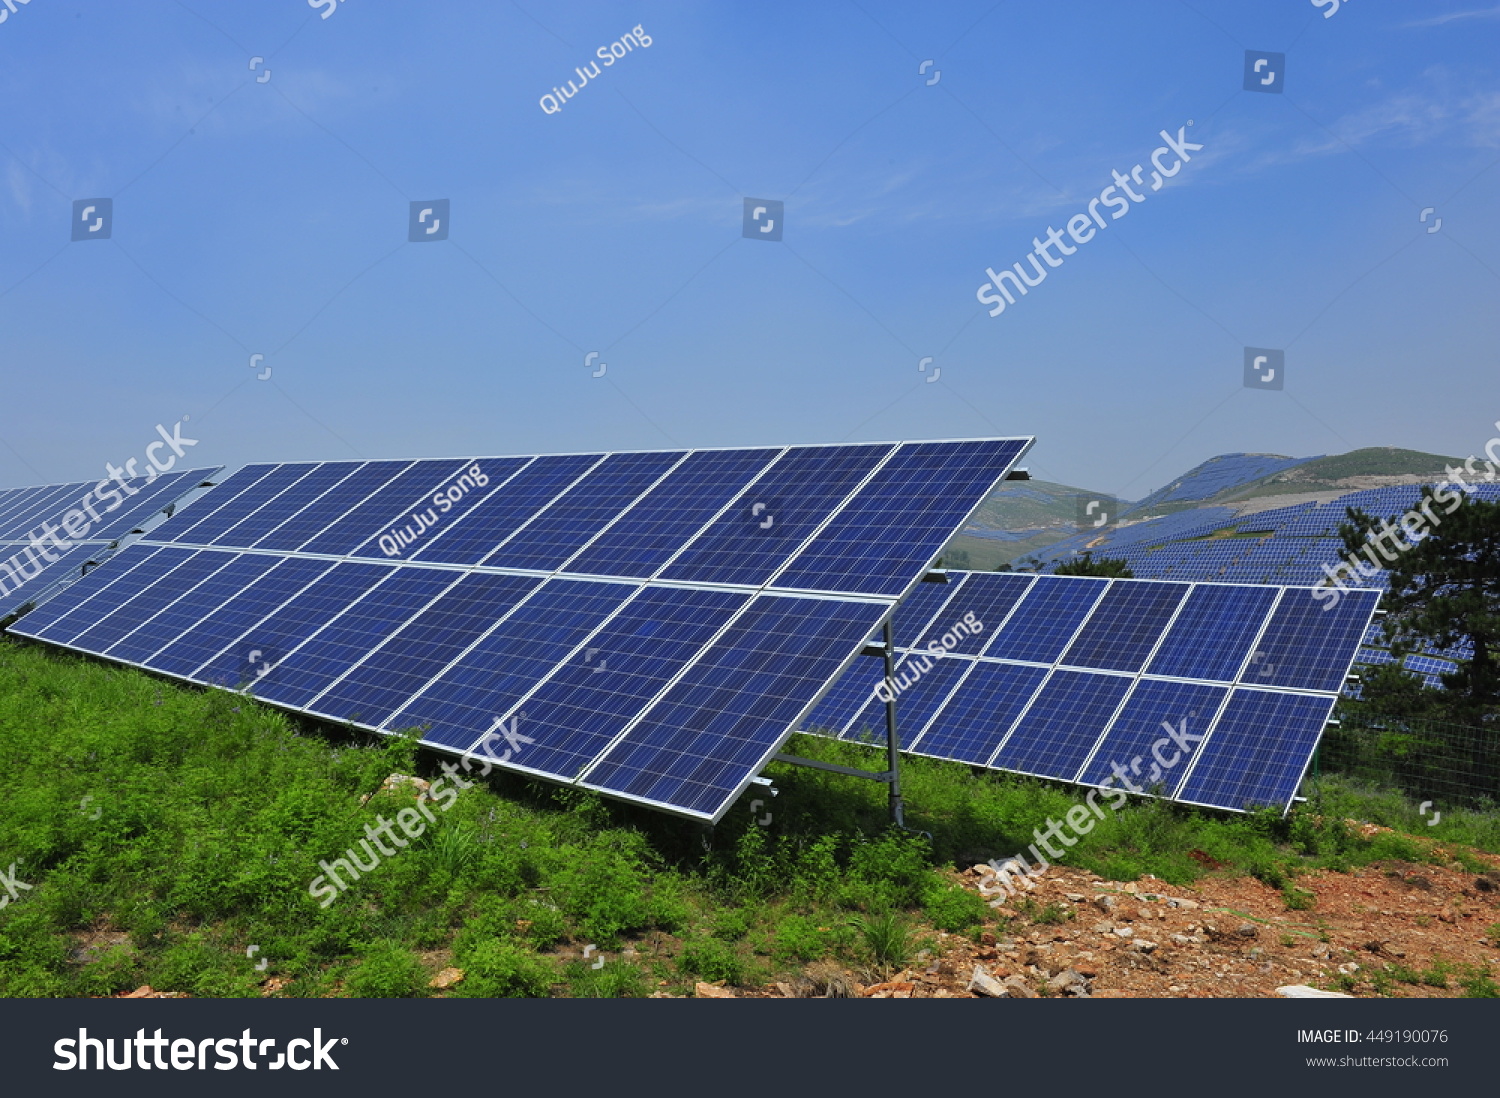 Solar Power Equipment Stock Photo 449190076 : Shutterstock